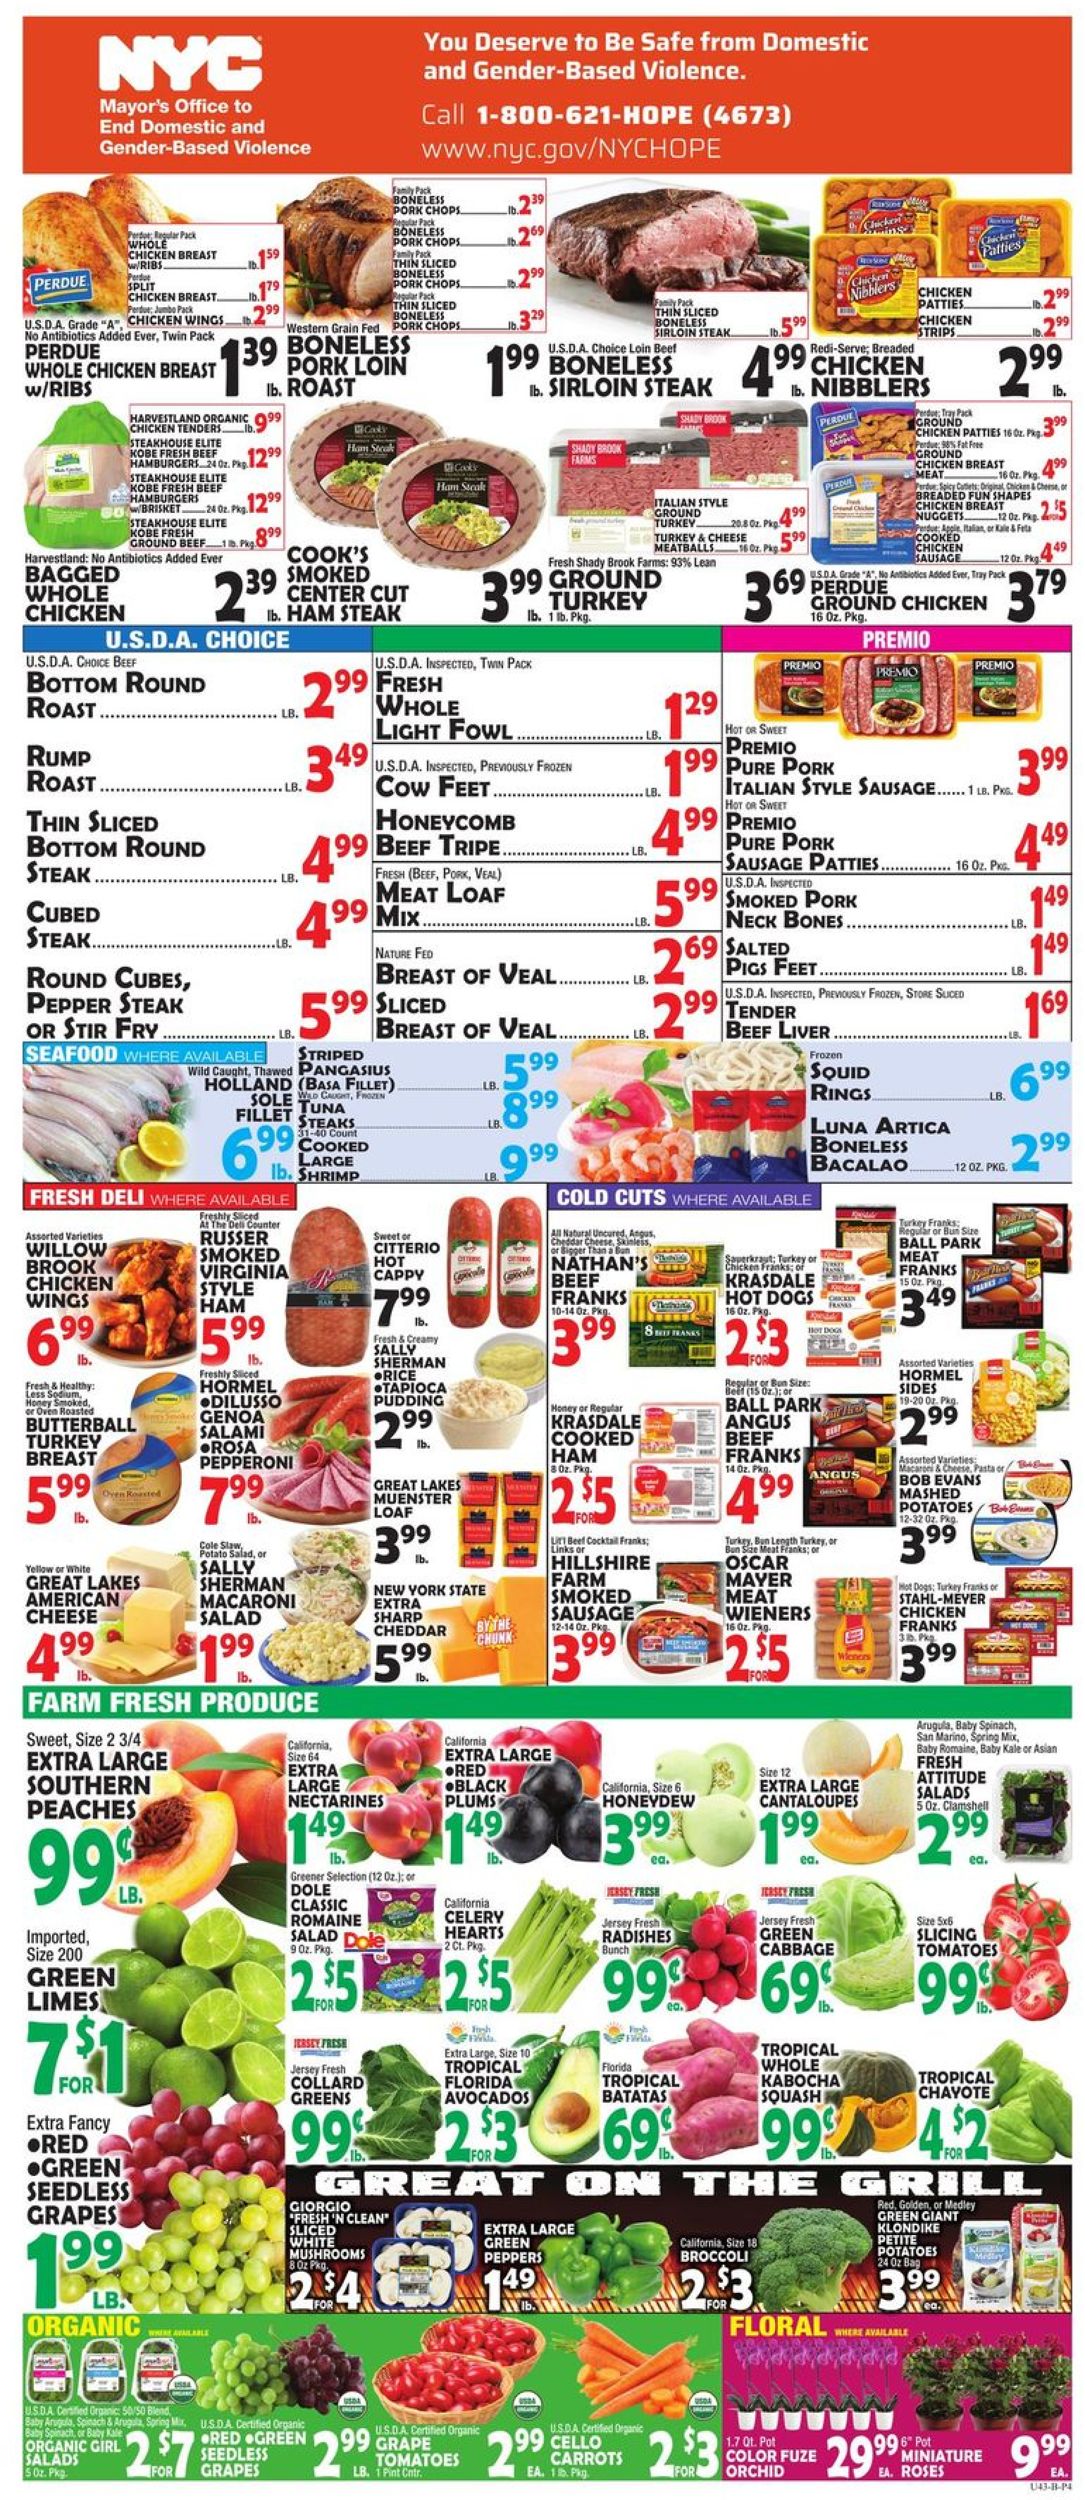 Catalogue Bravo Supermarkets from 08/02/2019